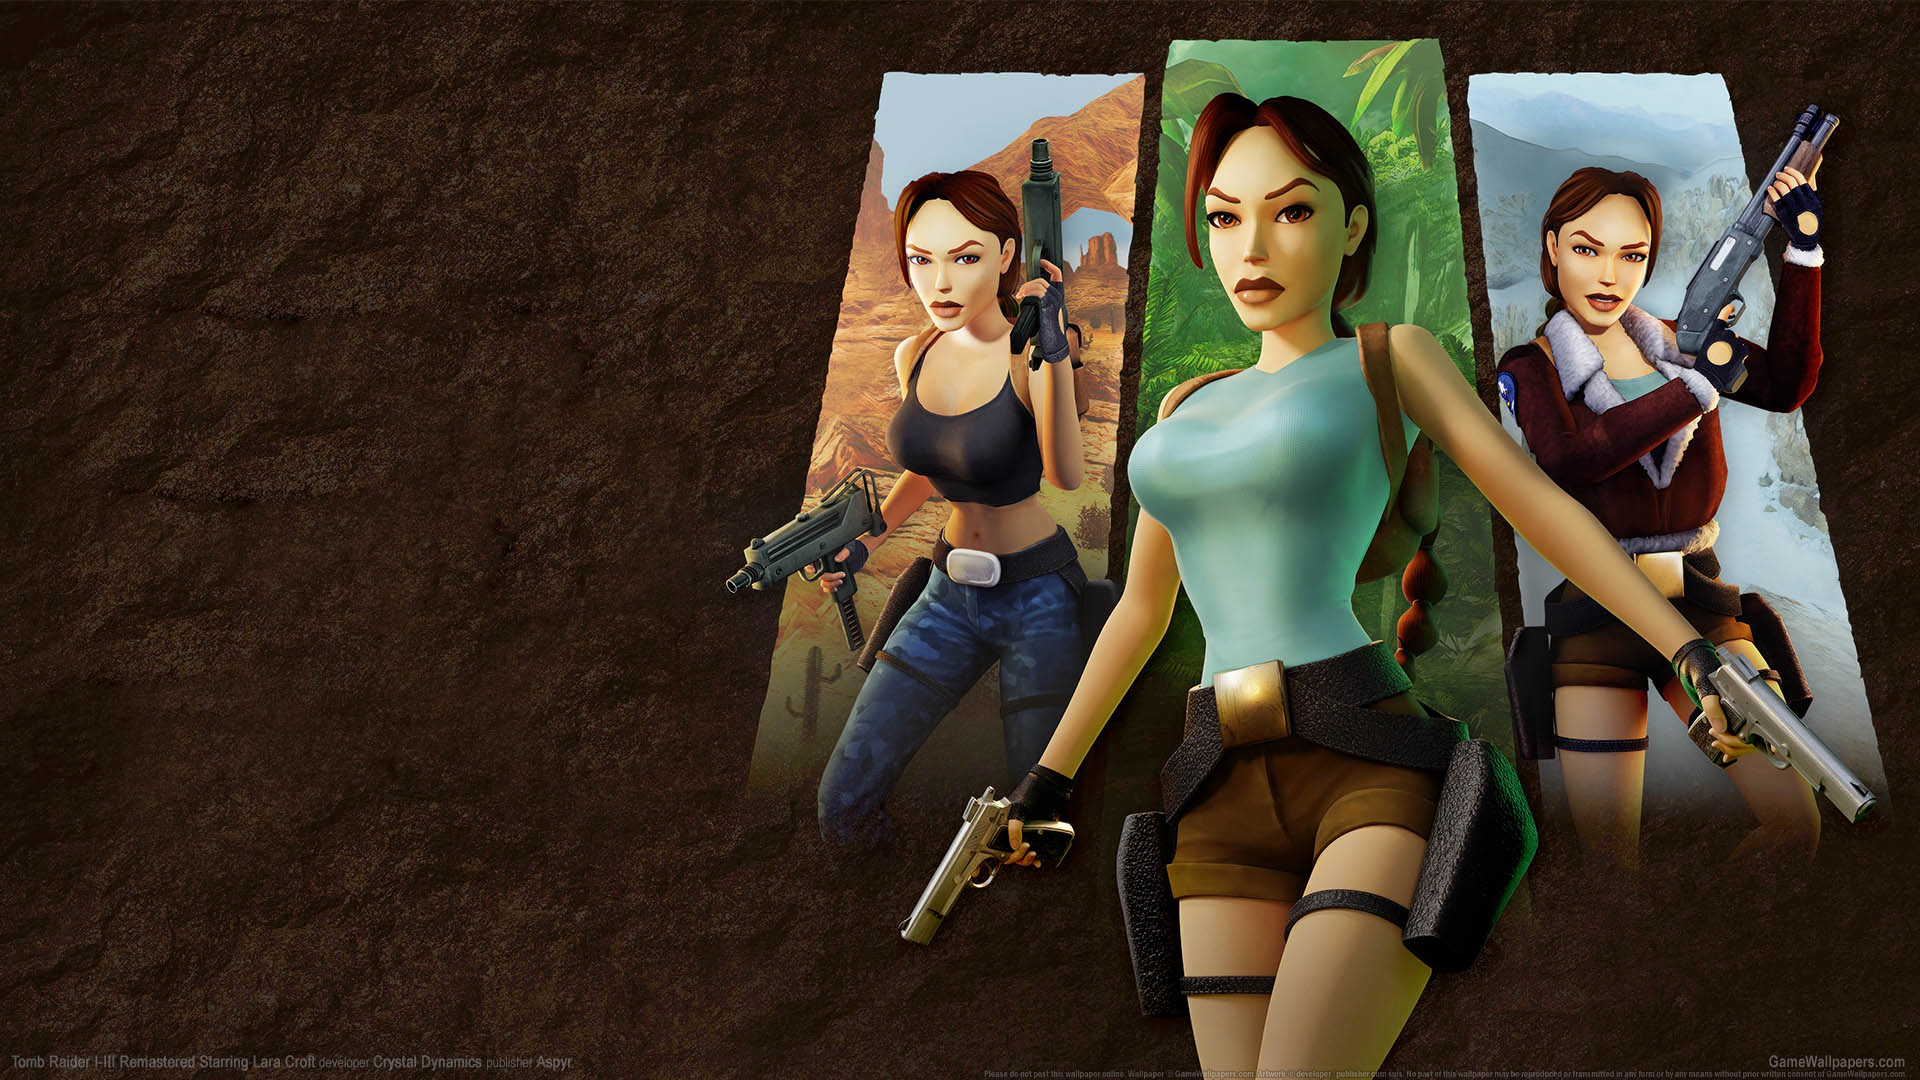 Tomb Raider I-III Remastered Starring Lara Croft achtergrond 01 1920x1080